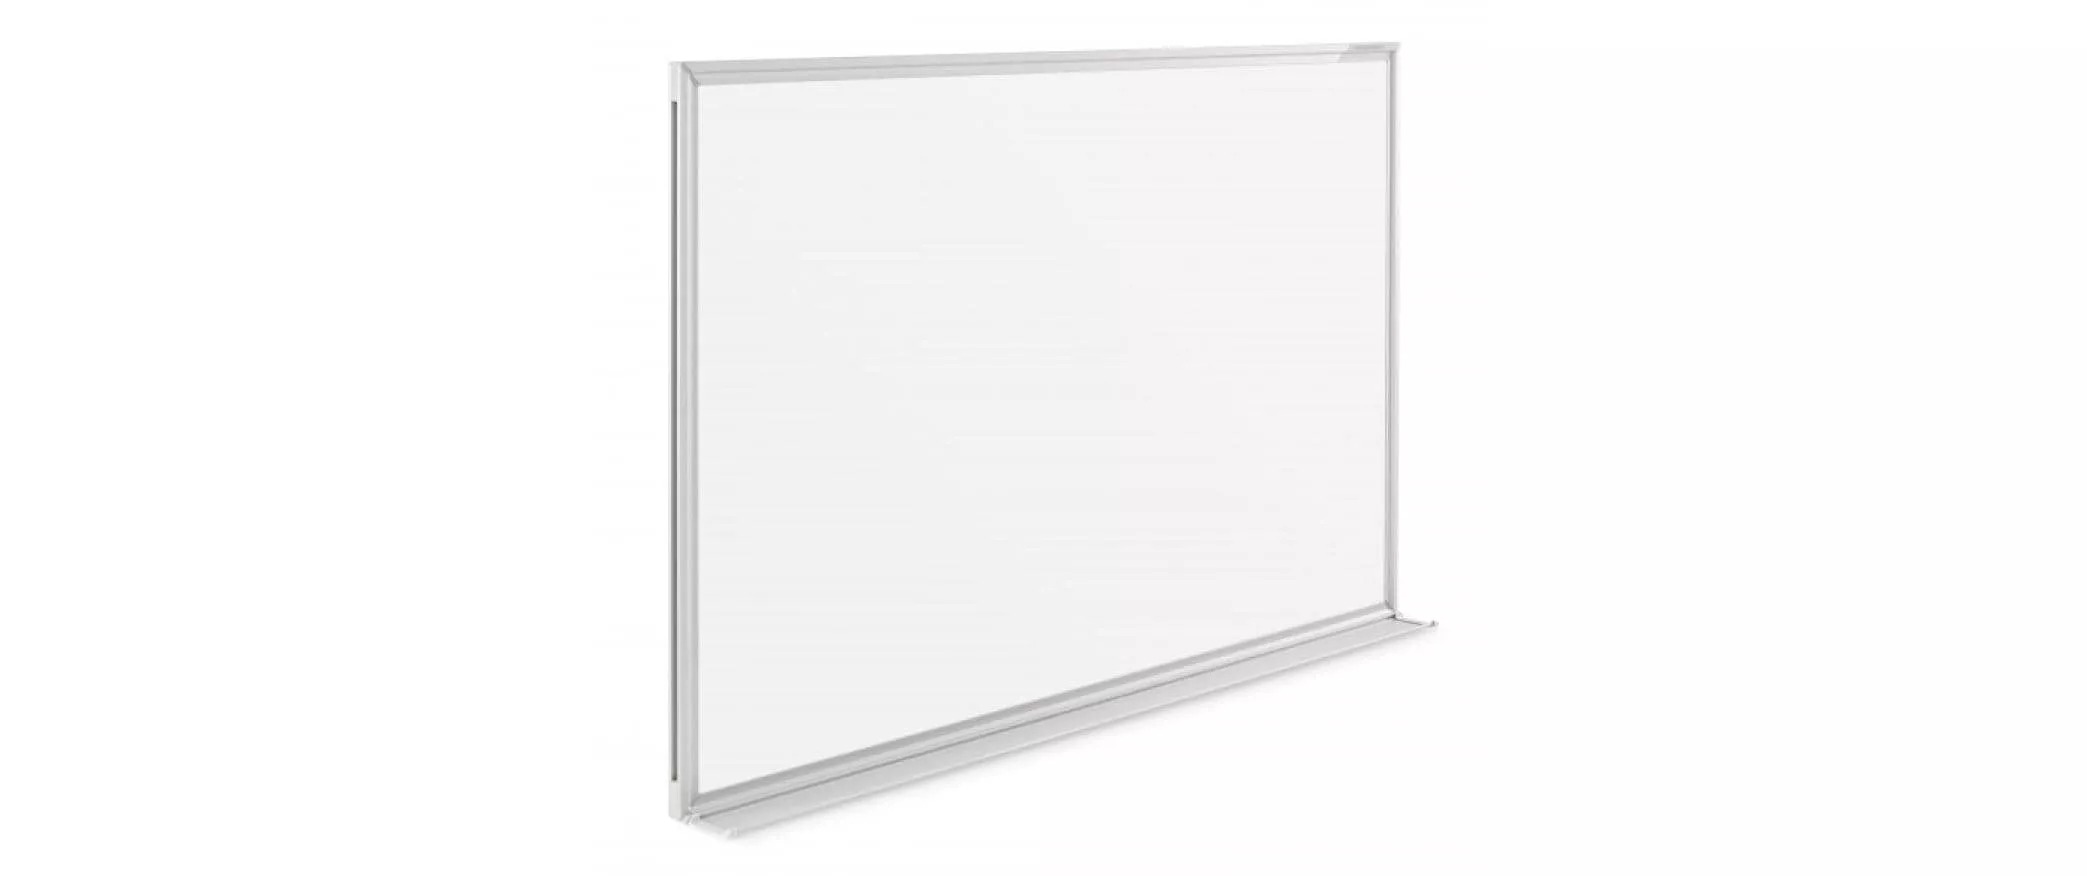 Tableau blanc Design SP 60 x 45 cm Blanc, 1 pièce